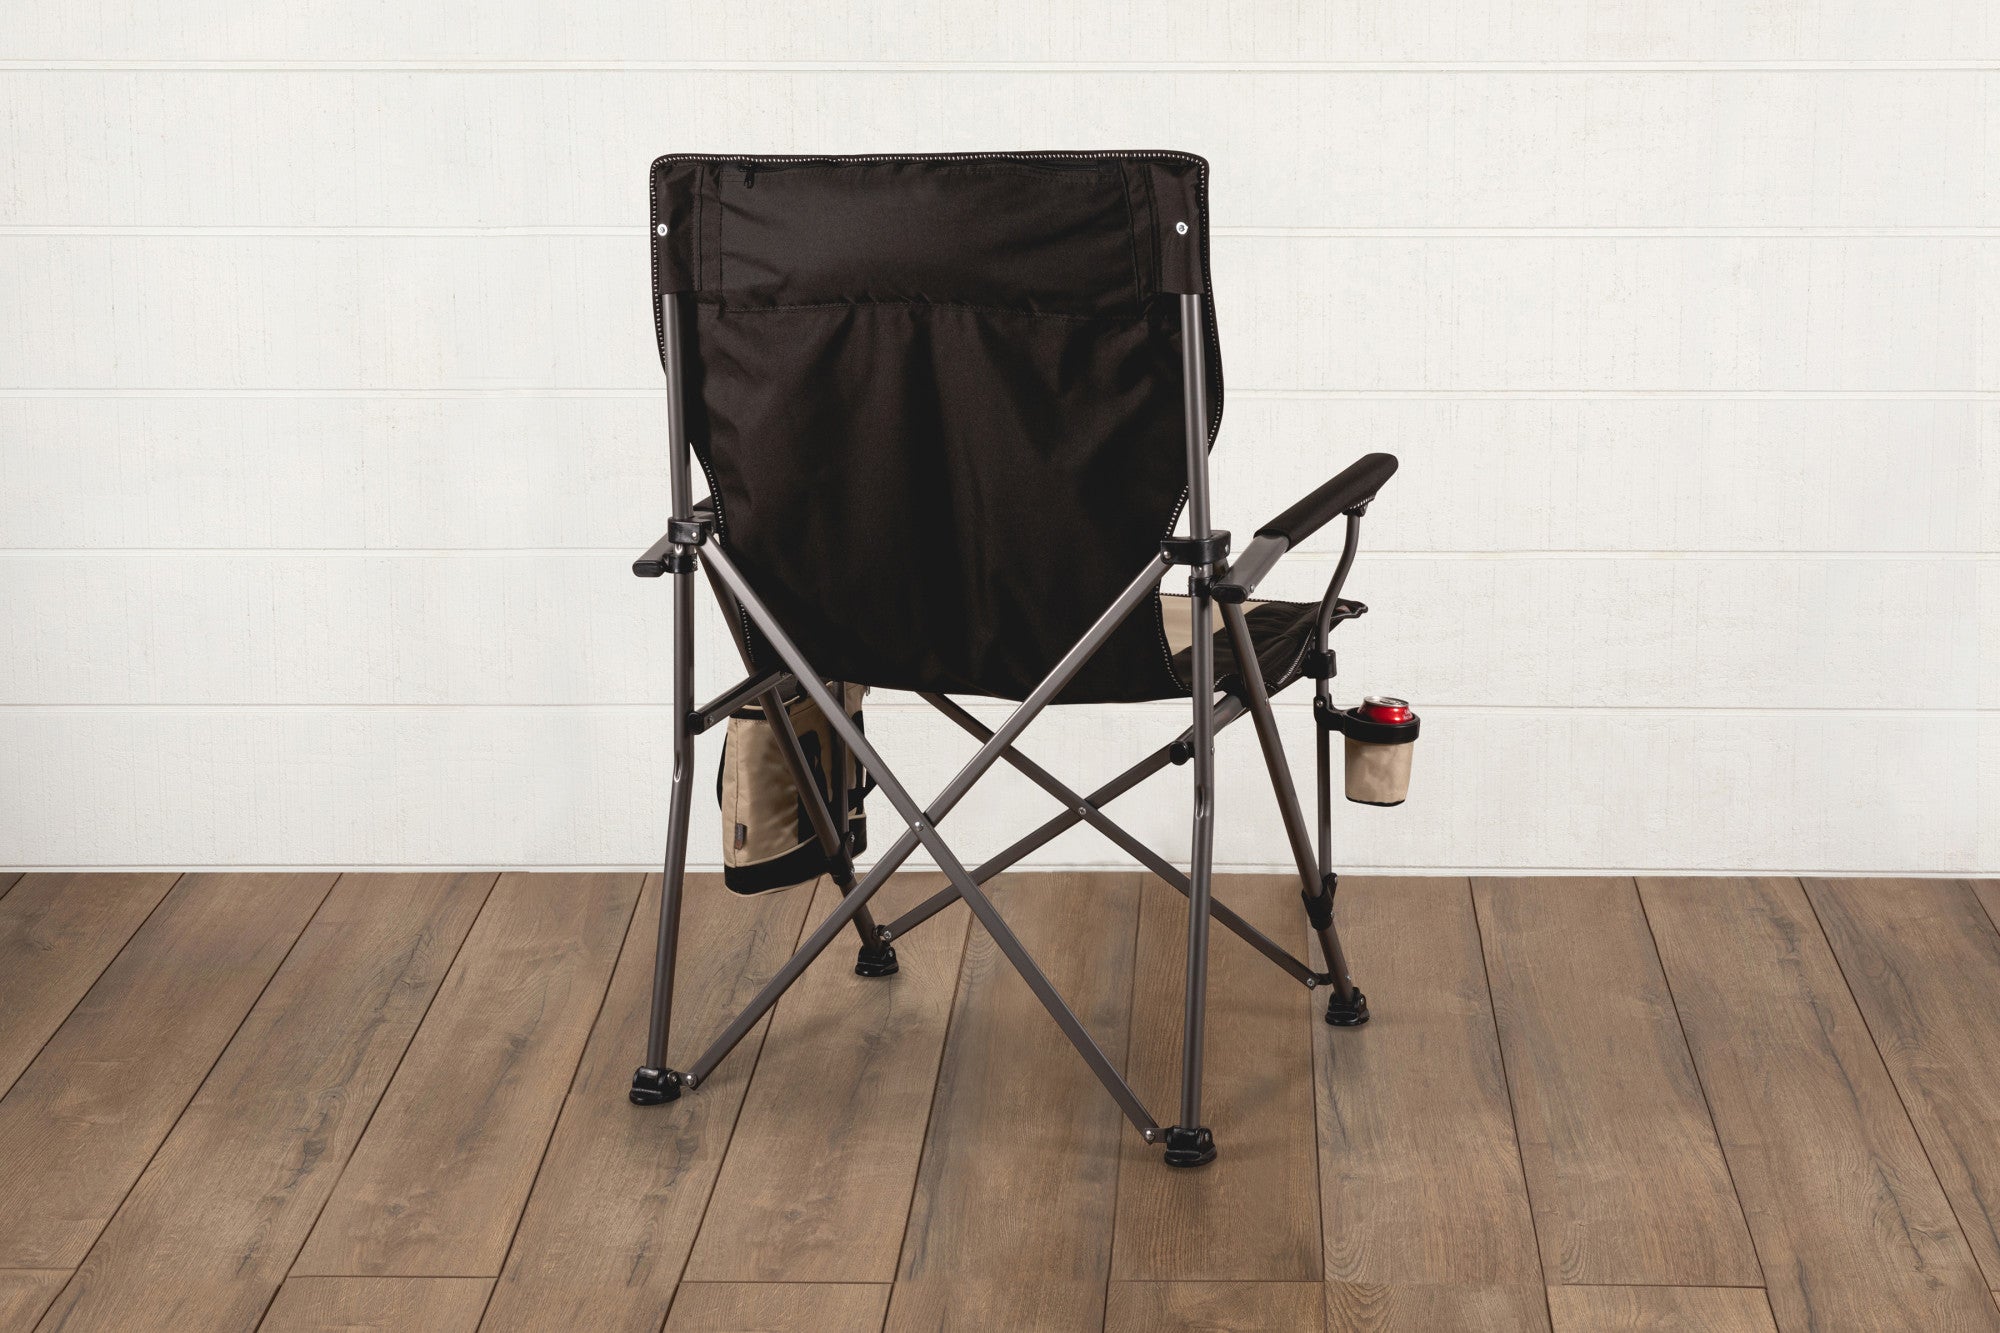 Big Bear XL Camp Chair with Cooler